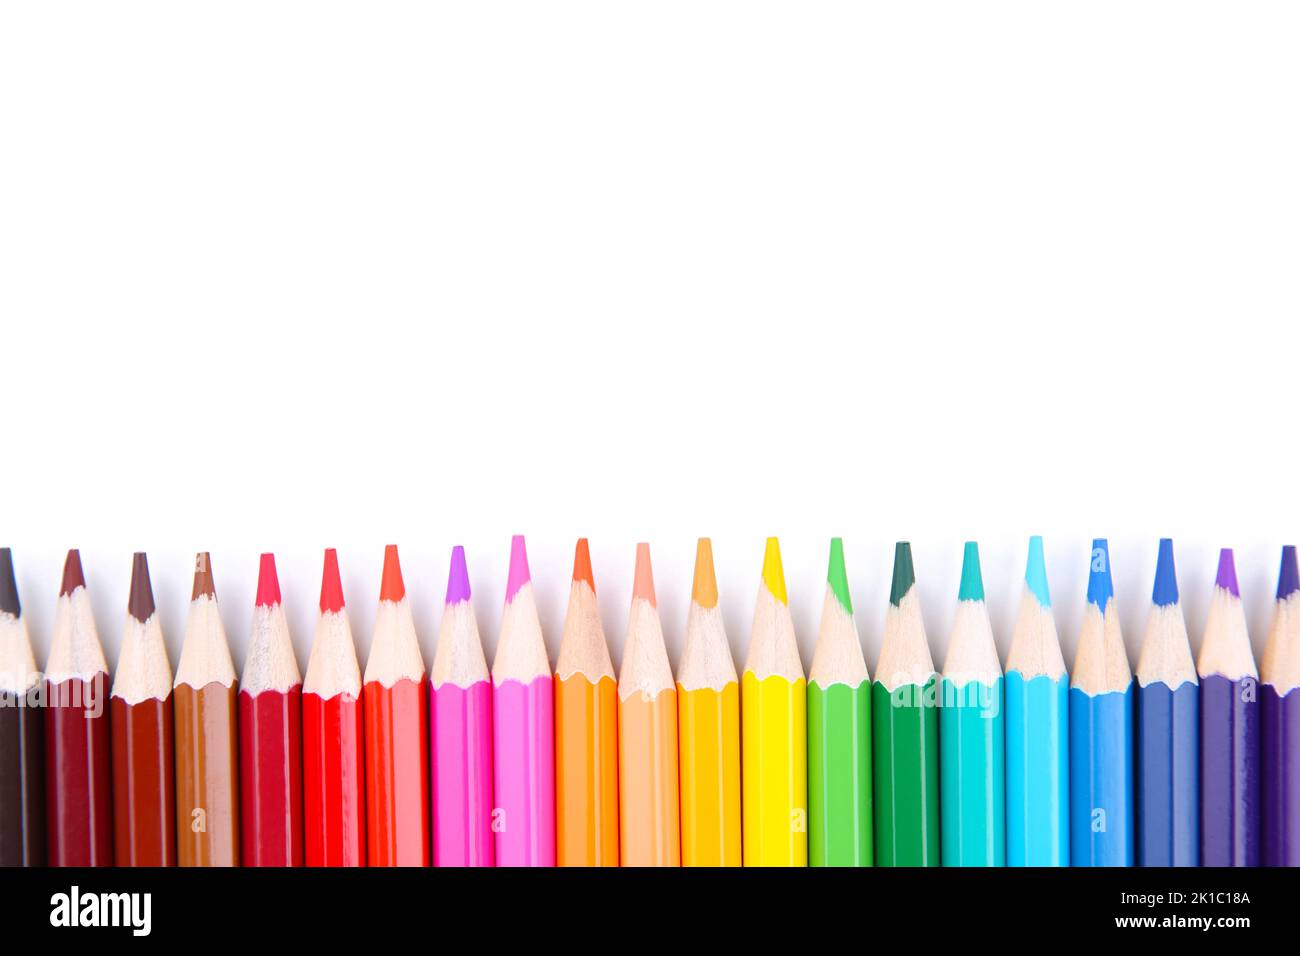 Many Color Pencils Pencil Colors Colorful Stock Photo 1152047327